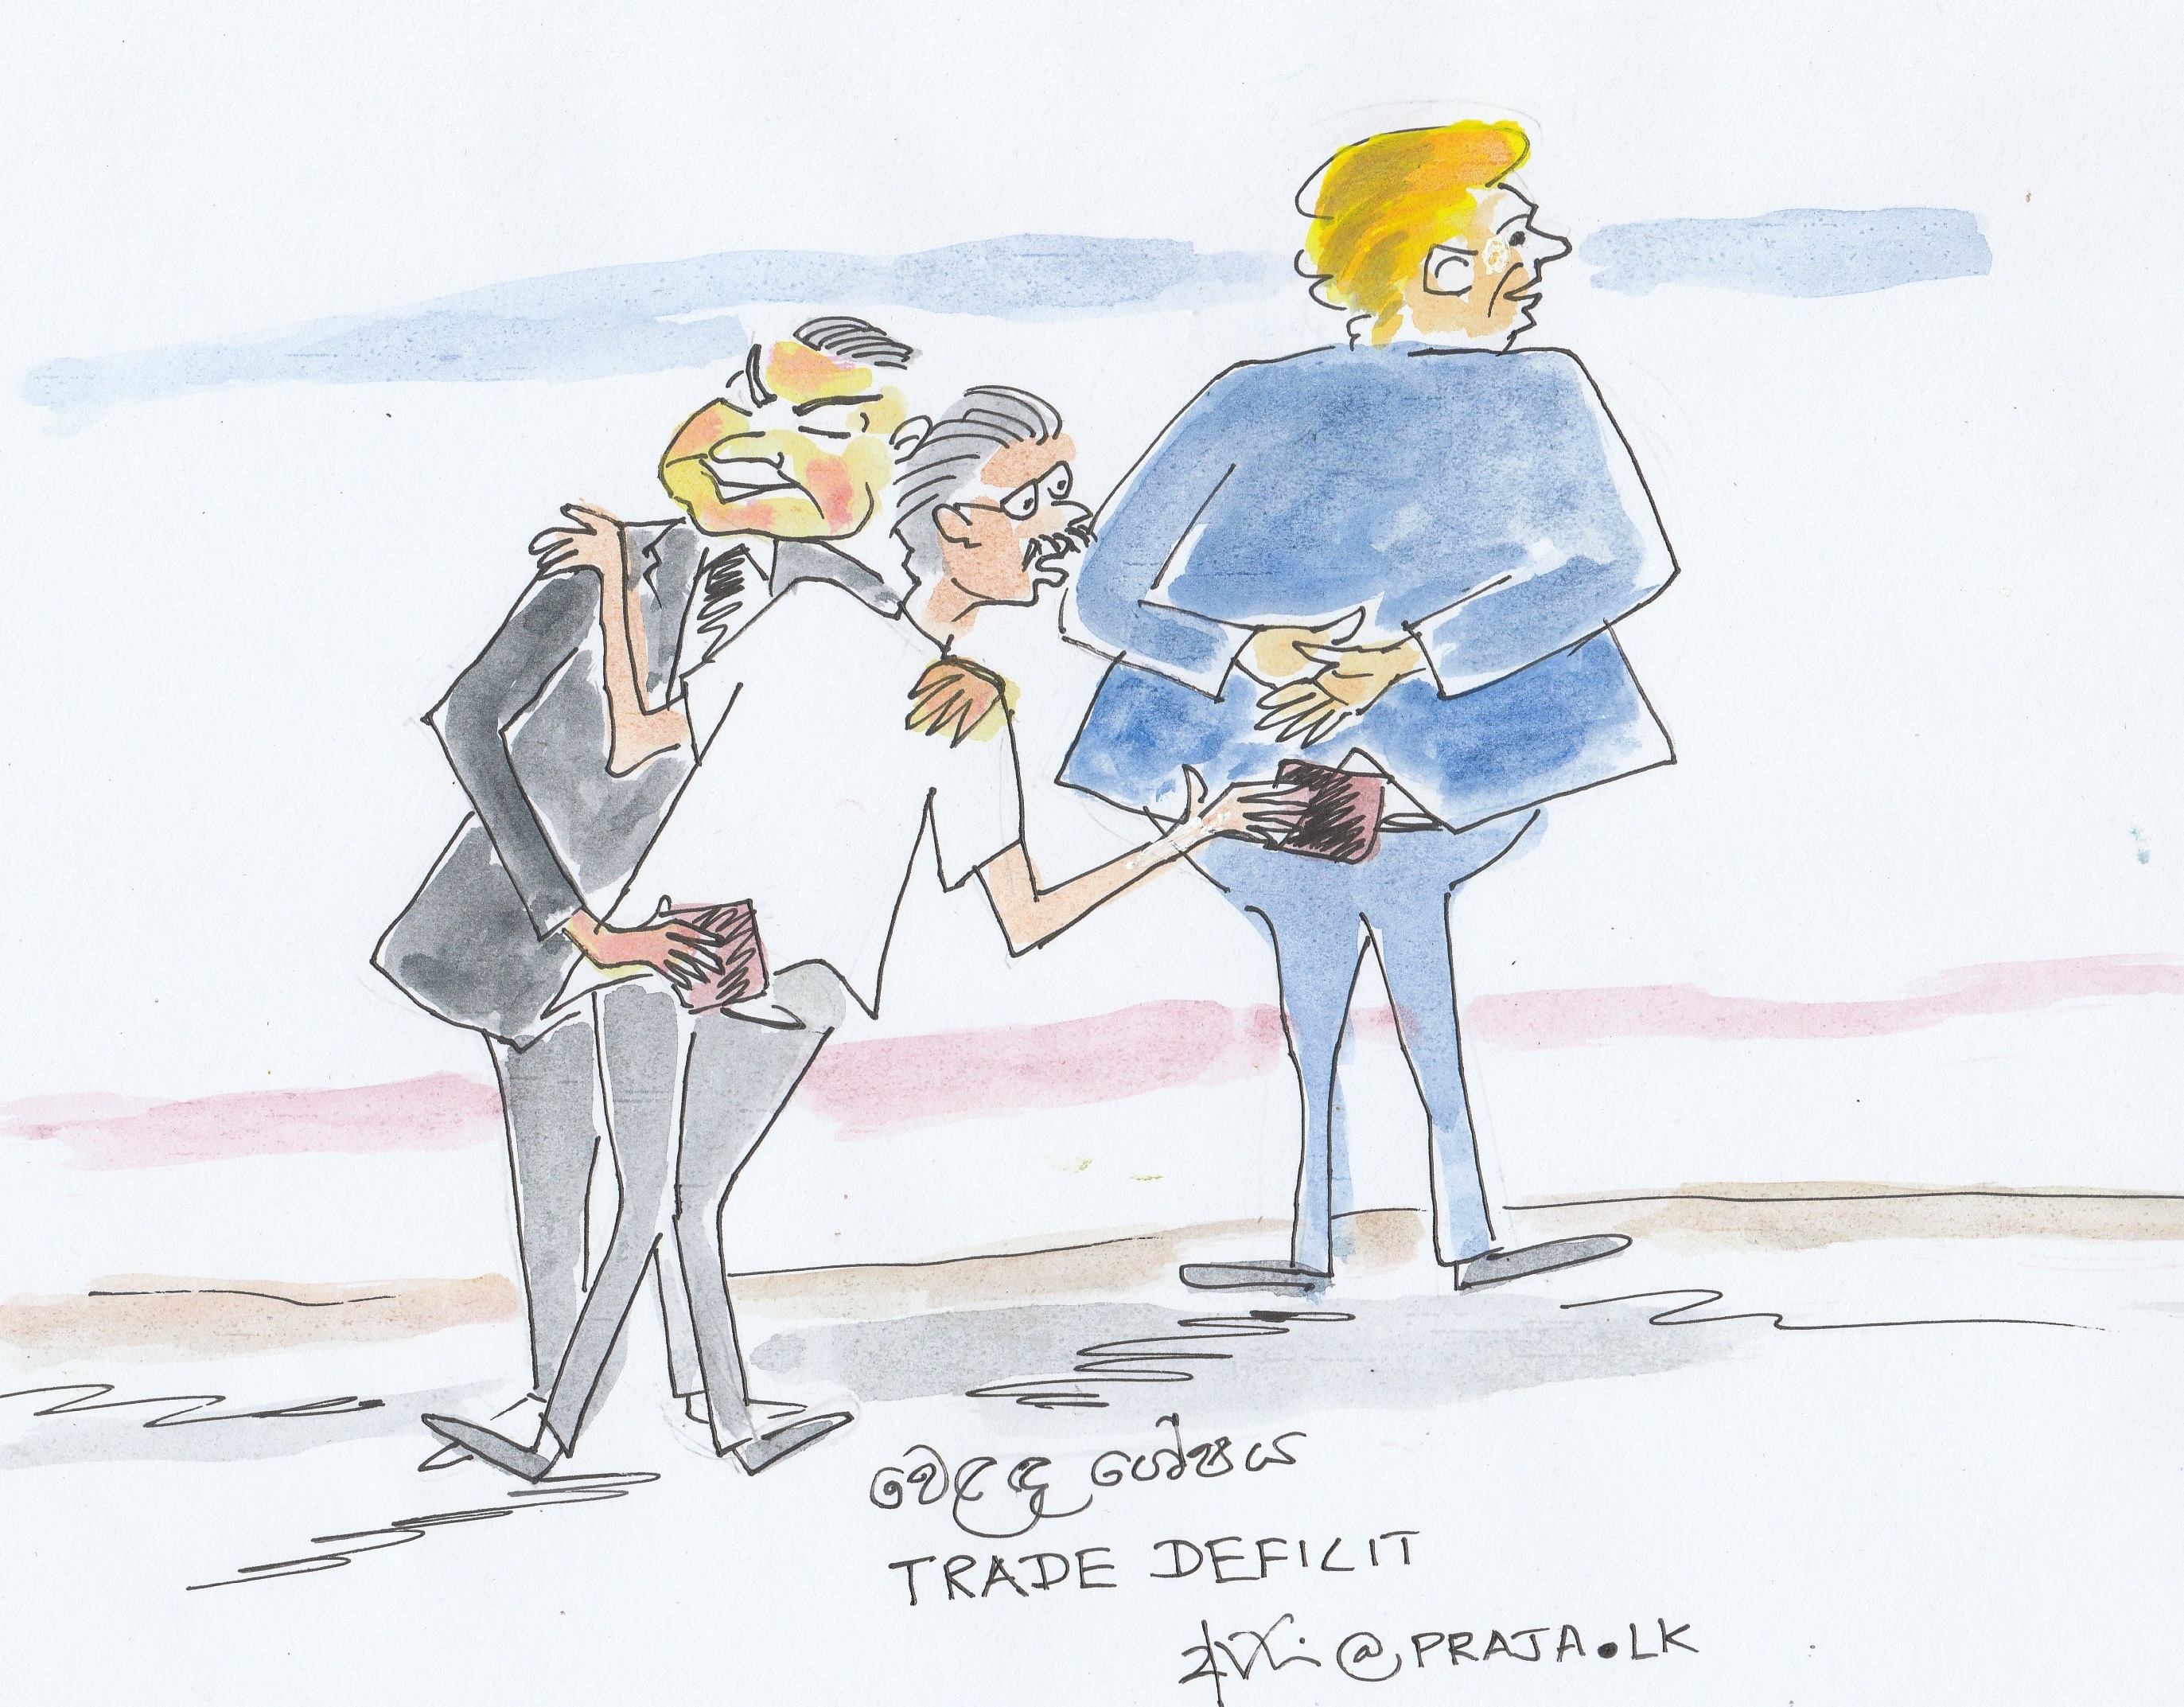 Trade deficits of Sri Lanka with China and US - cartoon